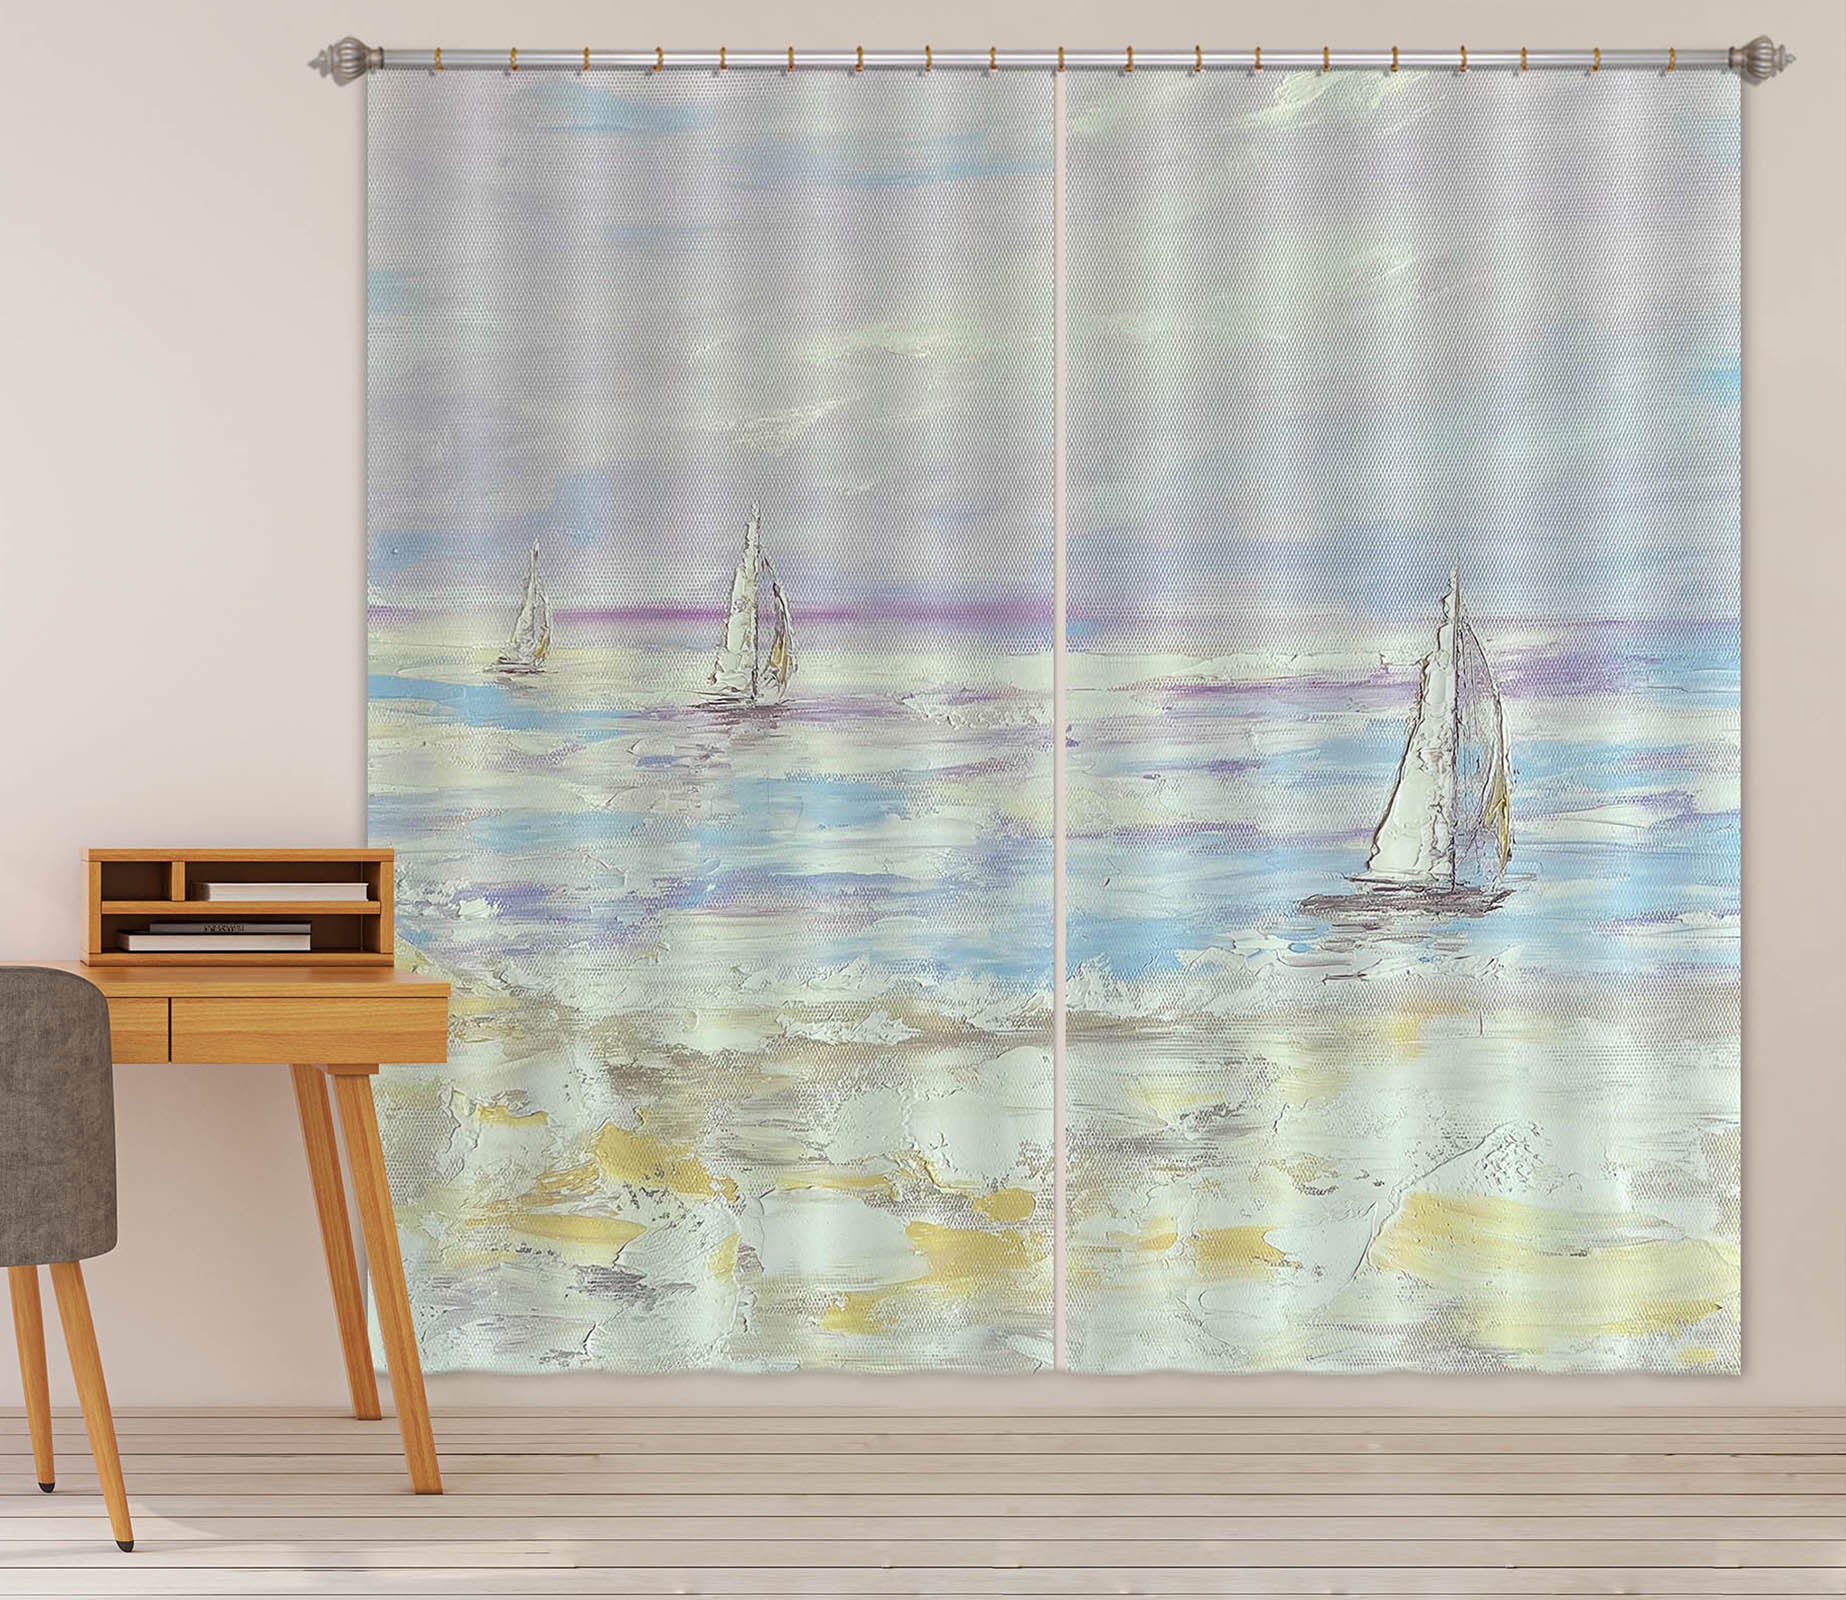 3D Painted Ocean 3004 Skromova Marina Curtain Curtains Drapes